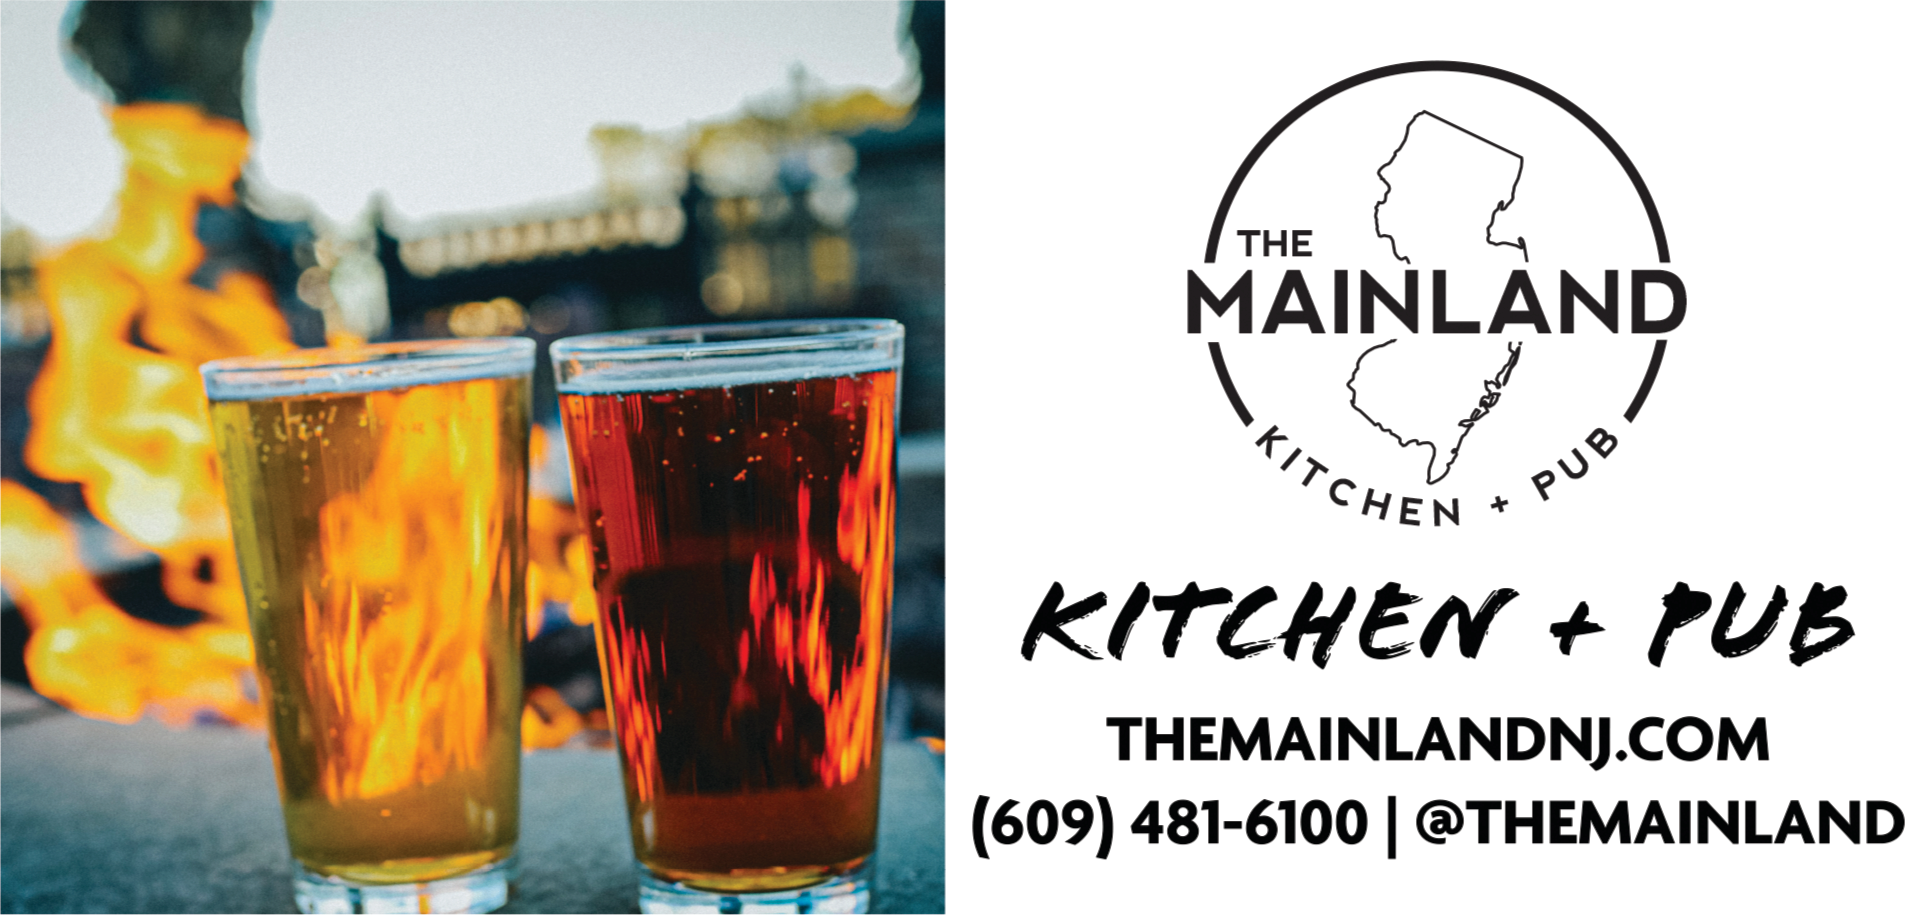 The Mainland Kitchen + Pub Print Ad